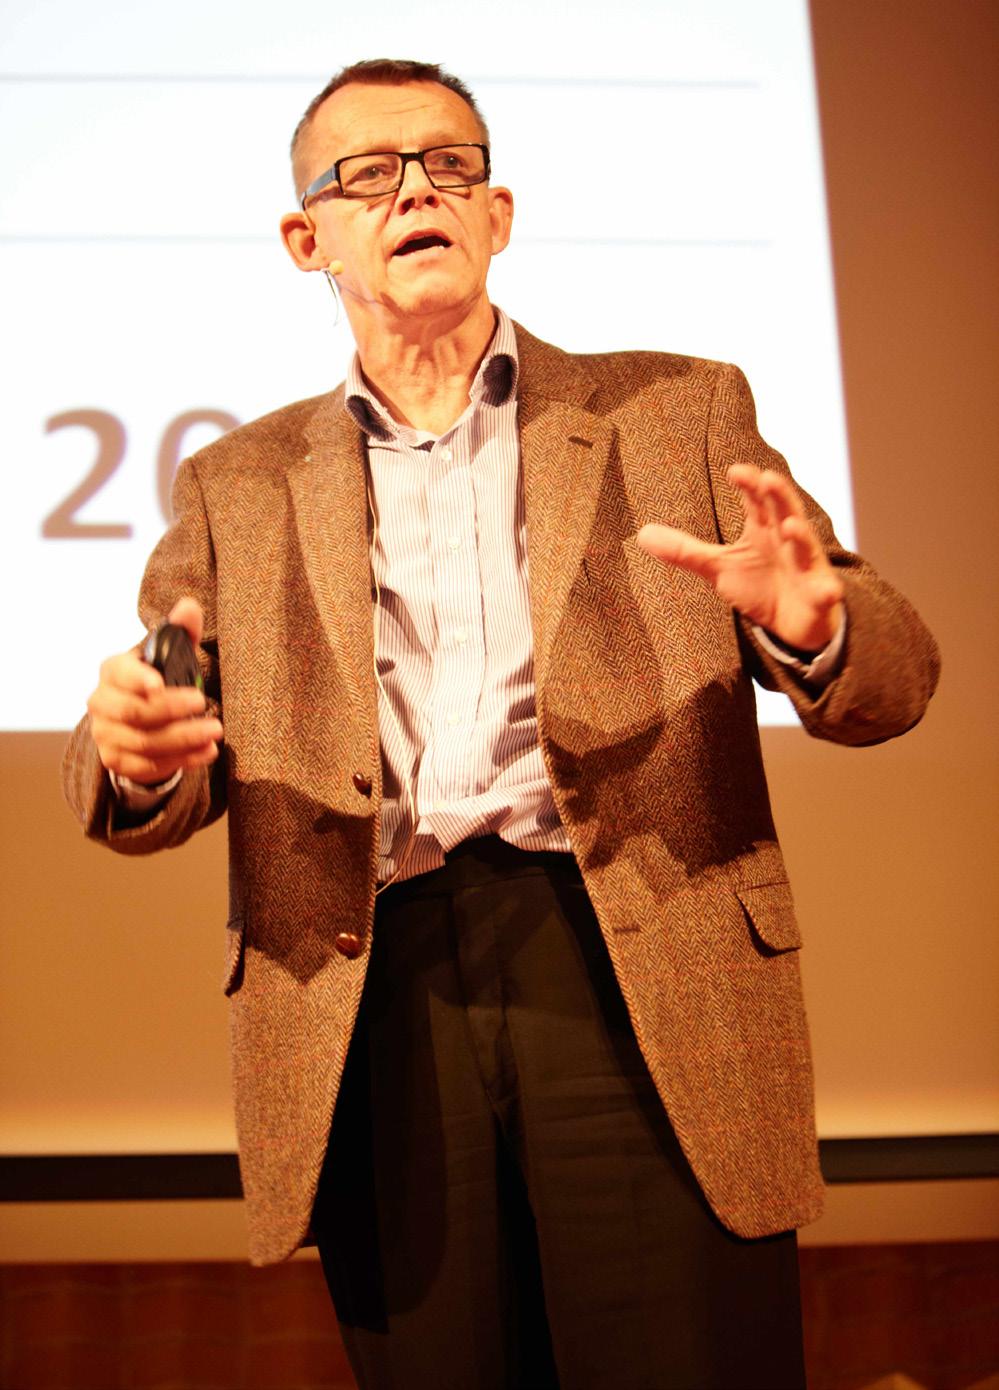 Hans Rosling på Nordisk konferens i Göteborg 2012 som arrangerades av Barnplantornas och Sahlgrenska universitetssjukhuset.